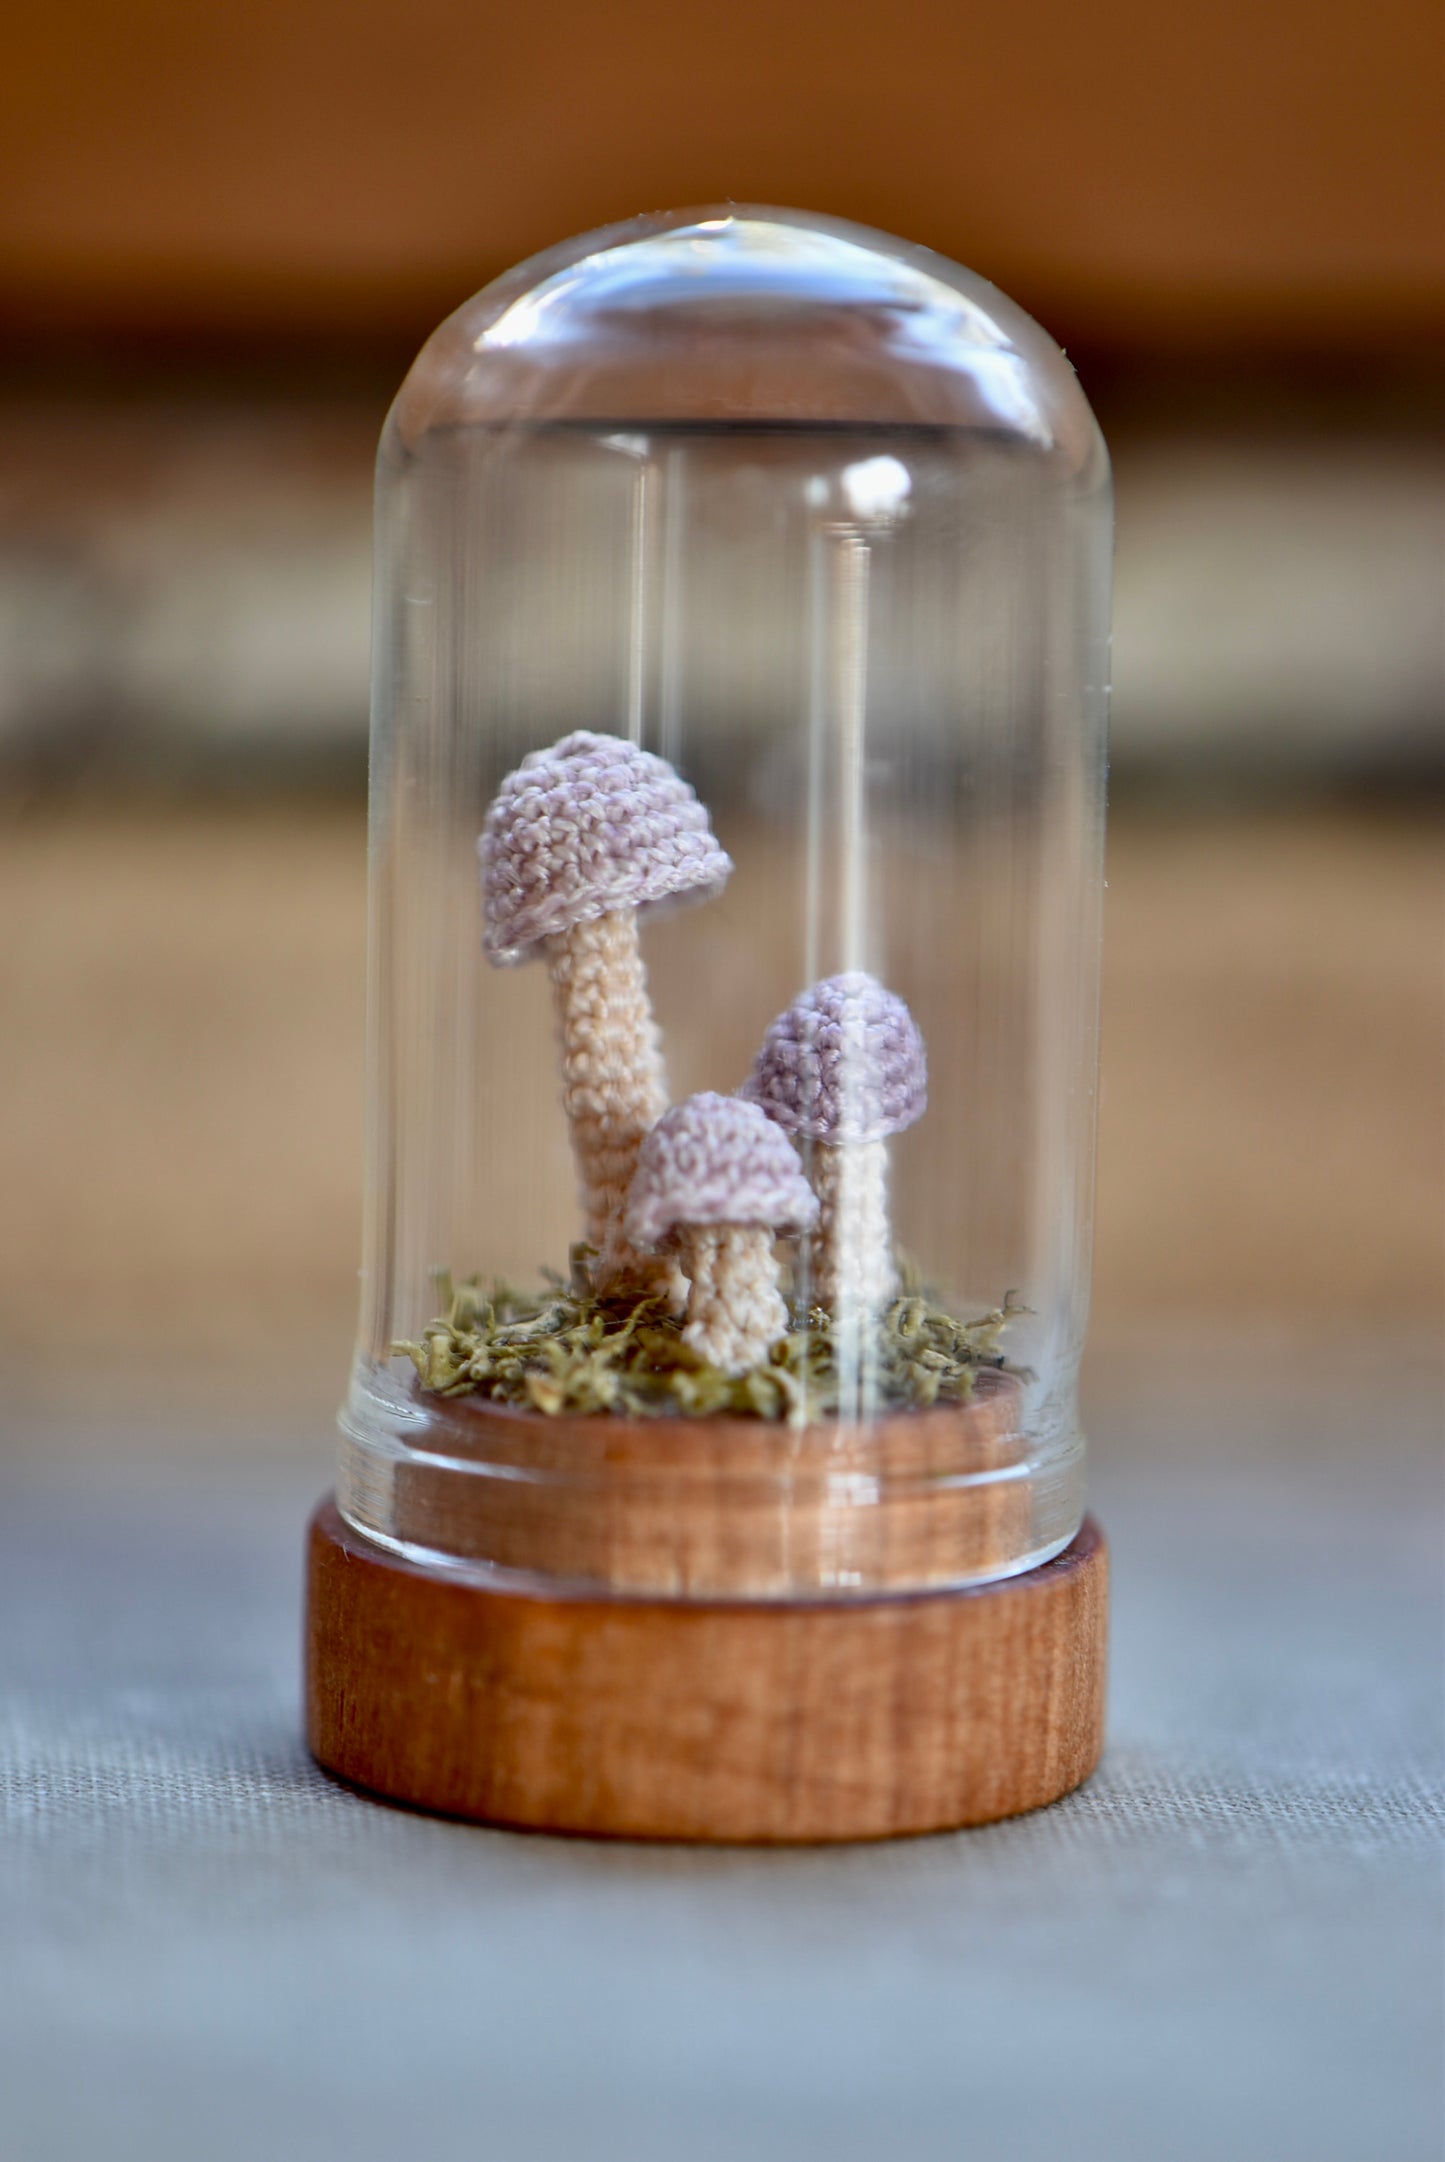 Crocheted Tiny Mushrooms - OOAK - Collaboration with Tinybellsoftheprairy